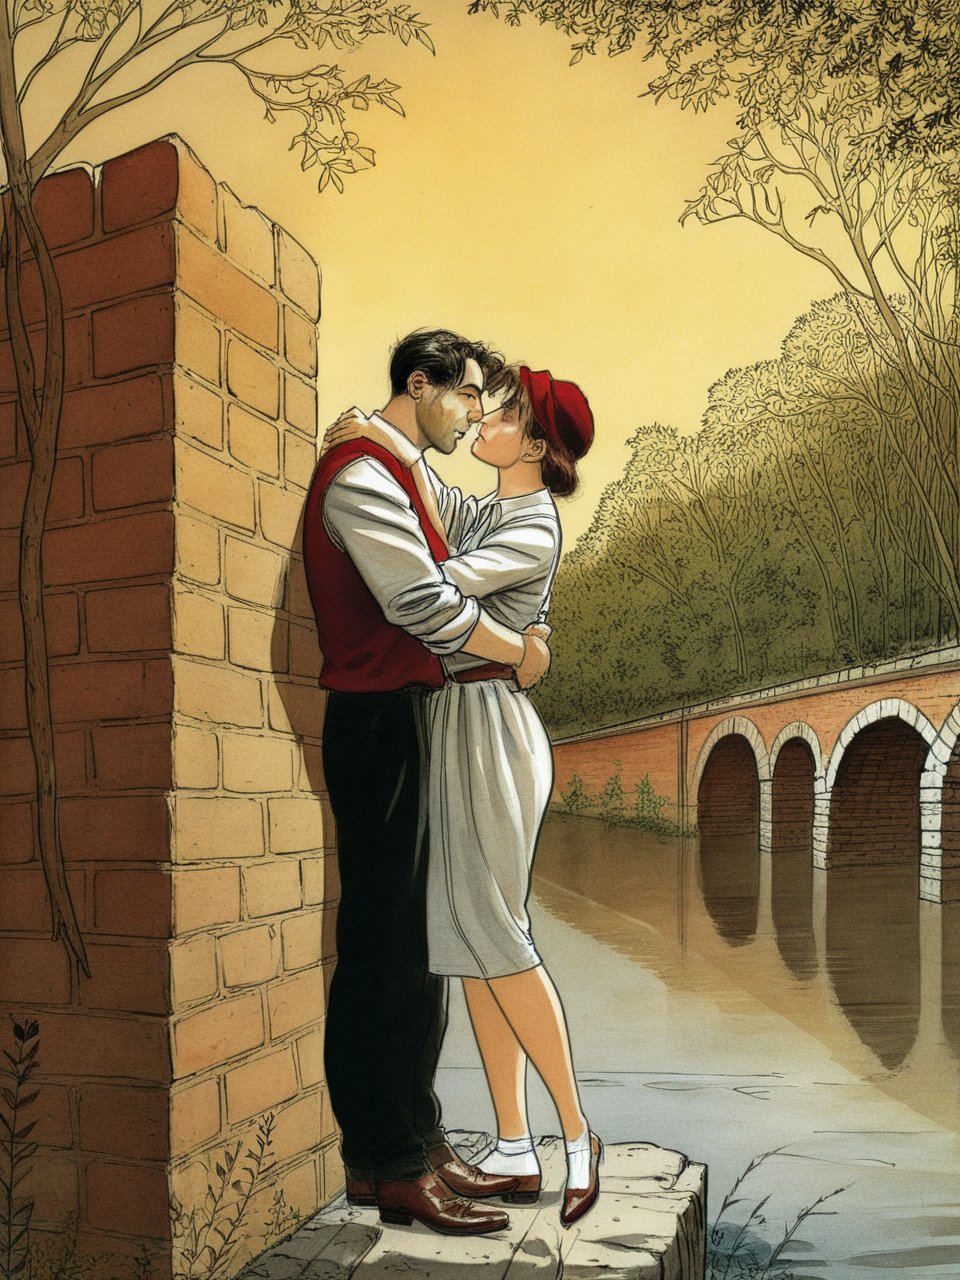 a man and woman embracing, outdoors, forest, brick wall, river, illustration by Jean-Pierre Gibrat <lora:byJeanPierreGibratXL:1>